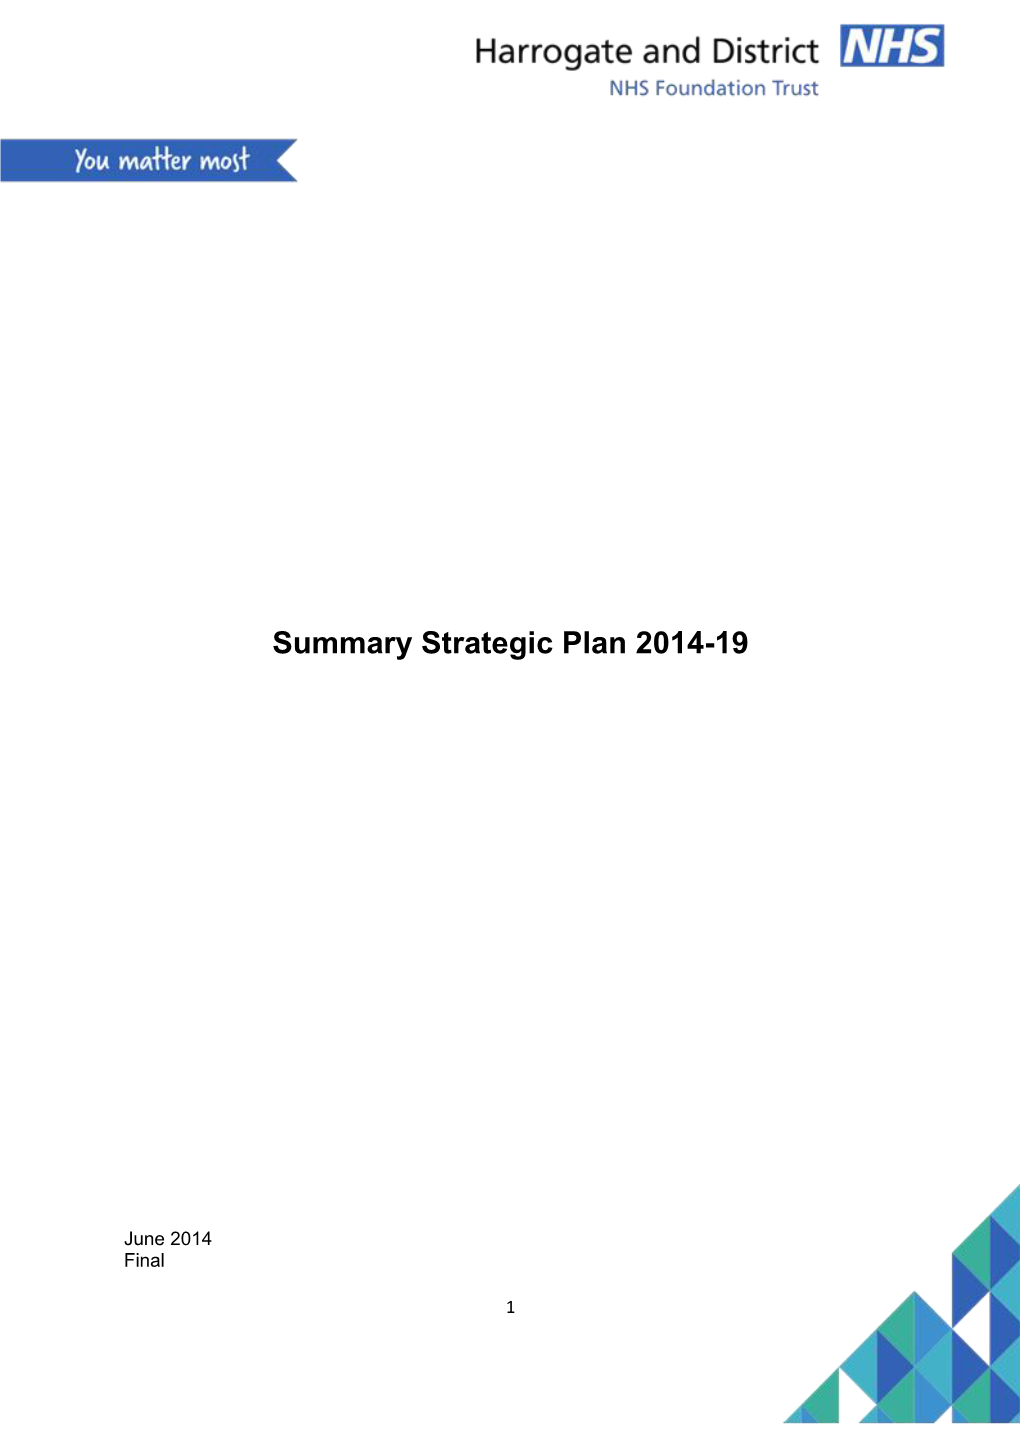 Summary Strategic Plan 2014-19